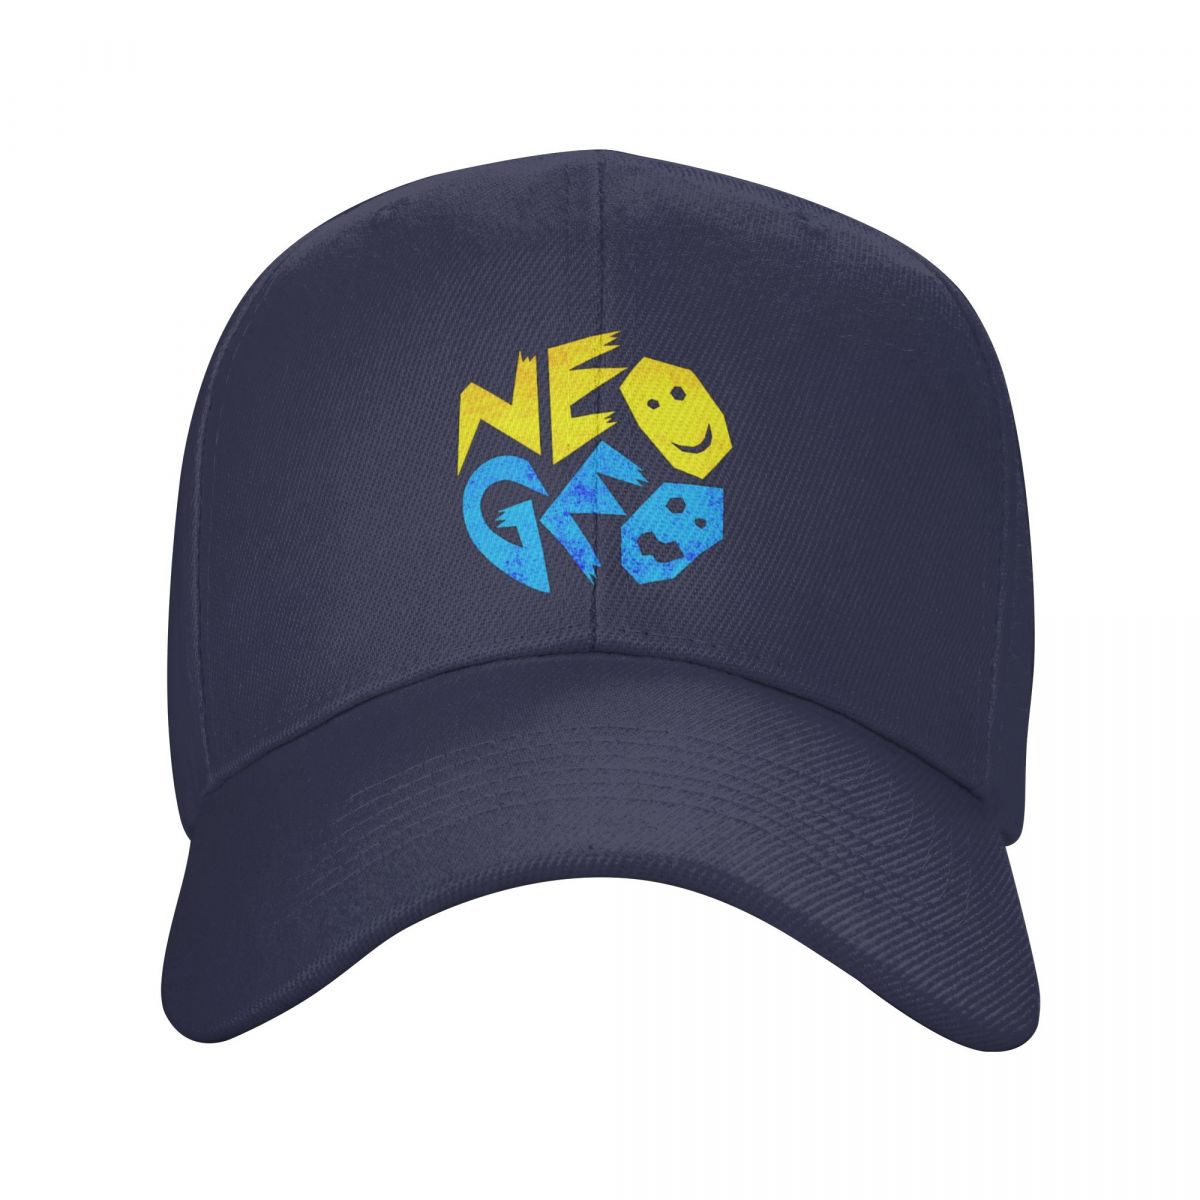 Neo Geo Arcade Game - Retro Gamer - Snapback Baseball Cap - Summer Hat For Men and Women-Navy Blue-Adjustable Cap-